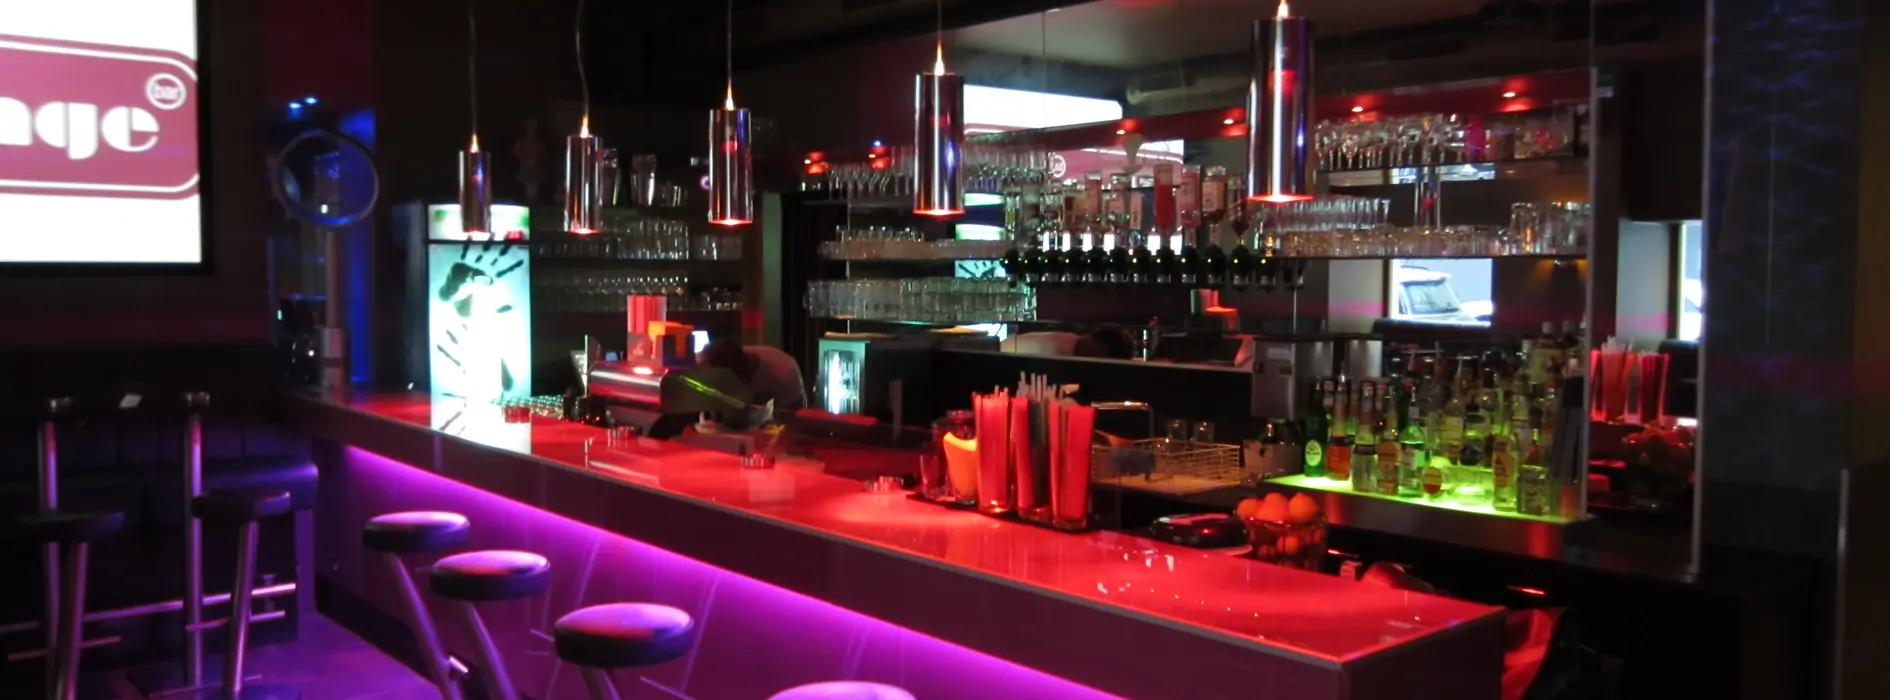 Vista interior de un bar